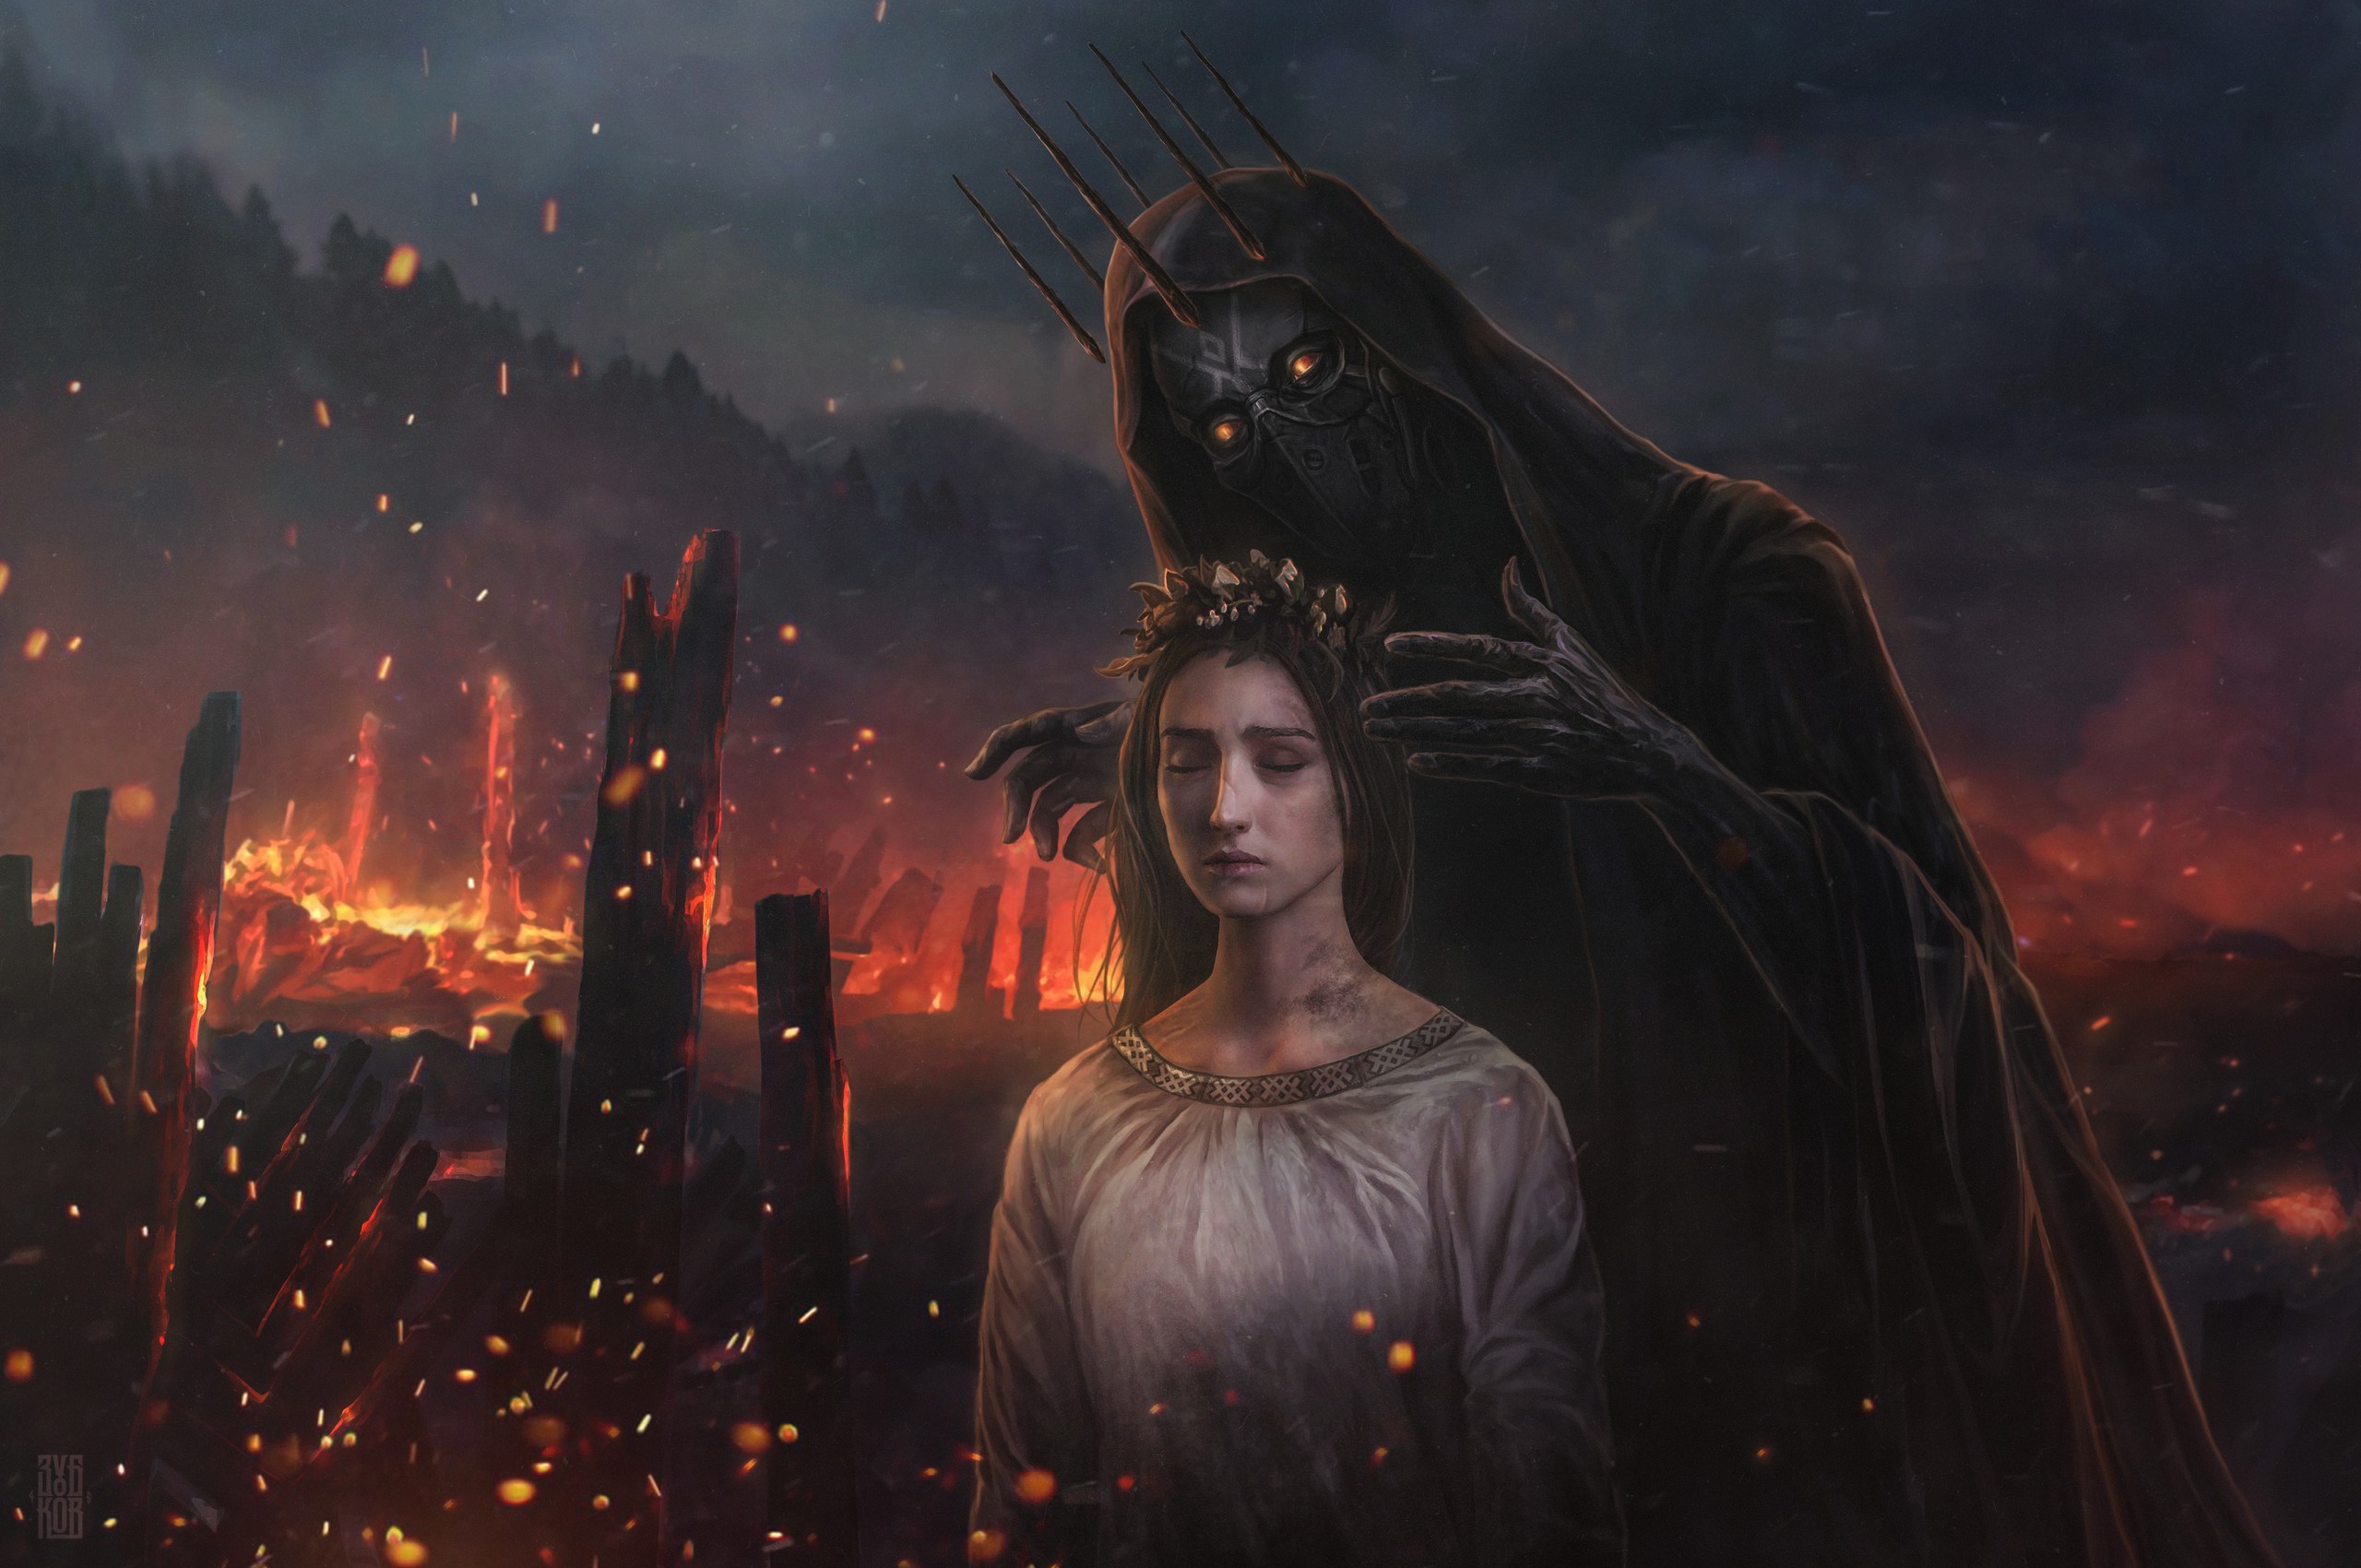 General 2560x1700 dark fantasy fantasy art fantasy girl demon fire burning artwork